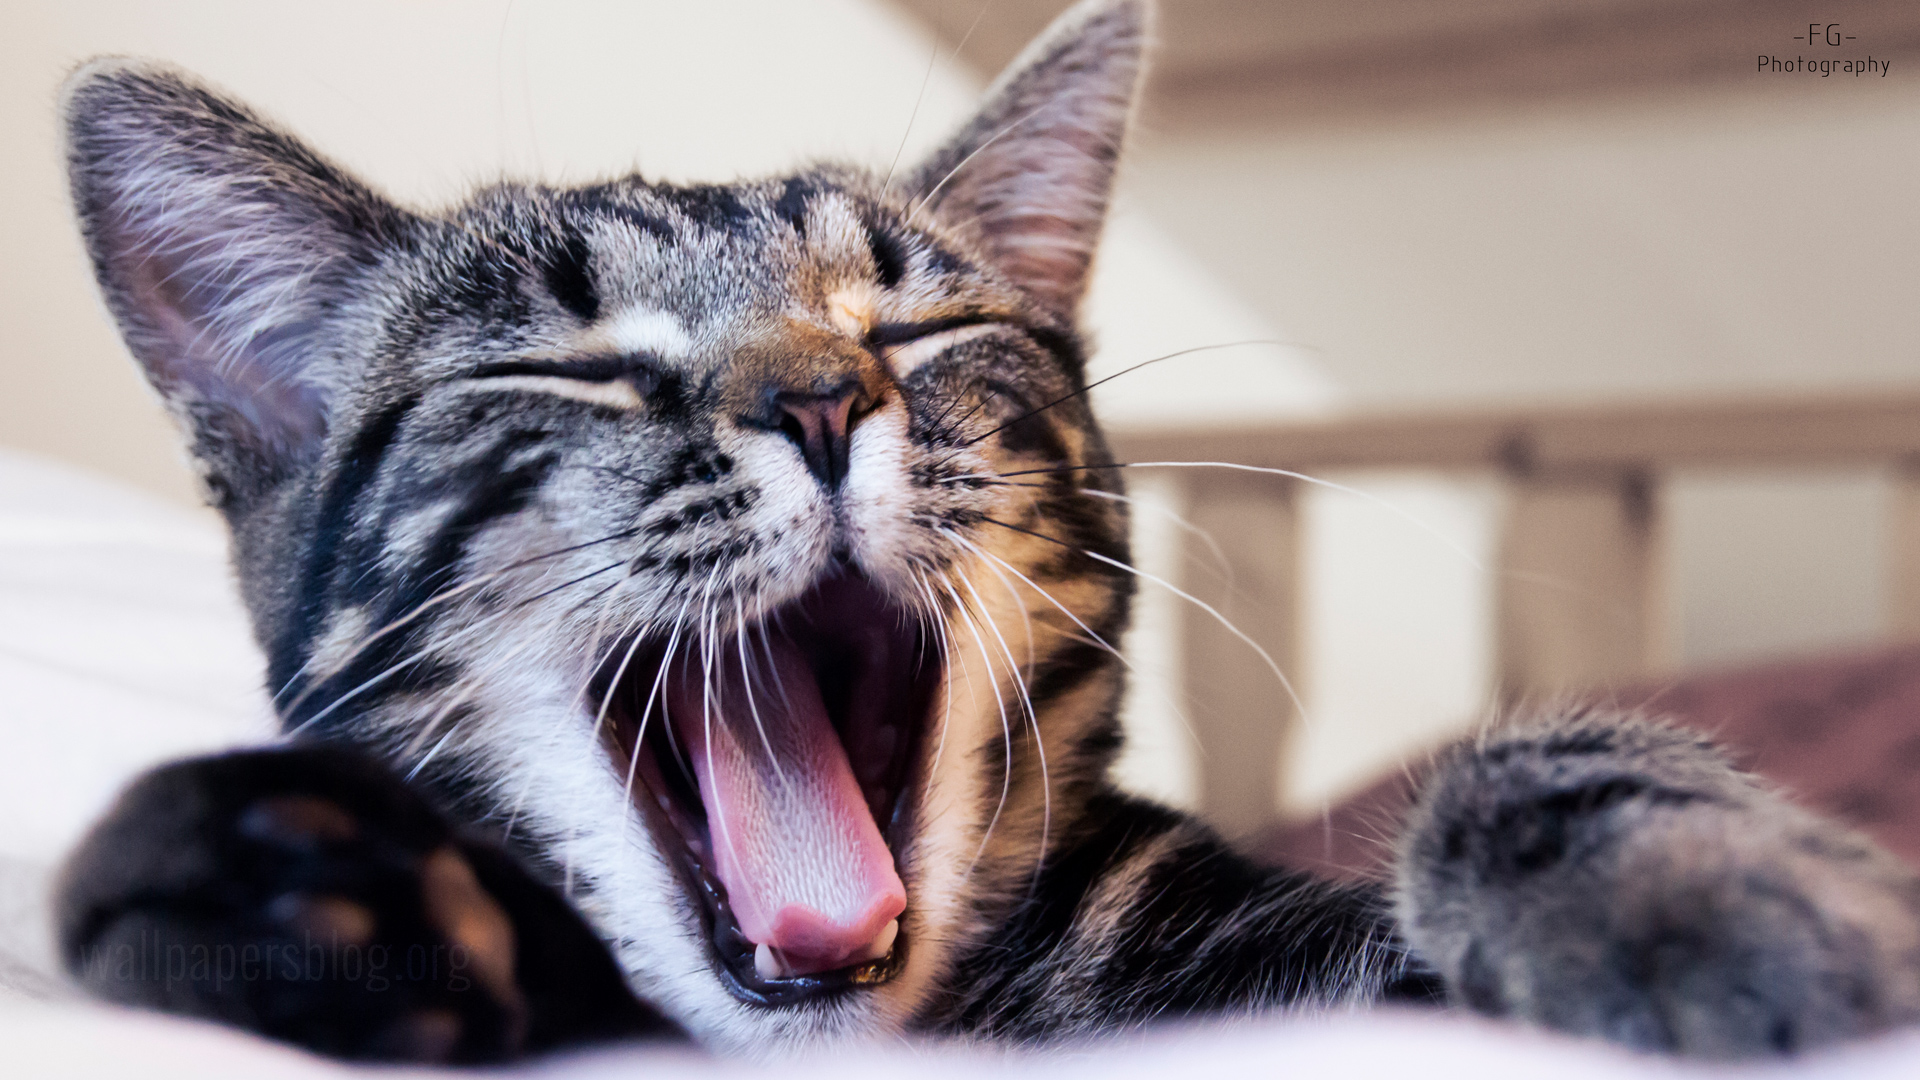 Cat yawning full hd 1080p wallpaper desktop background 1920x1080